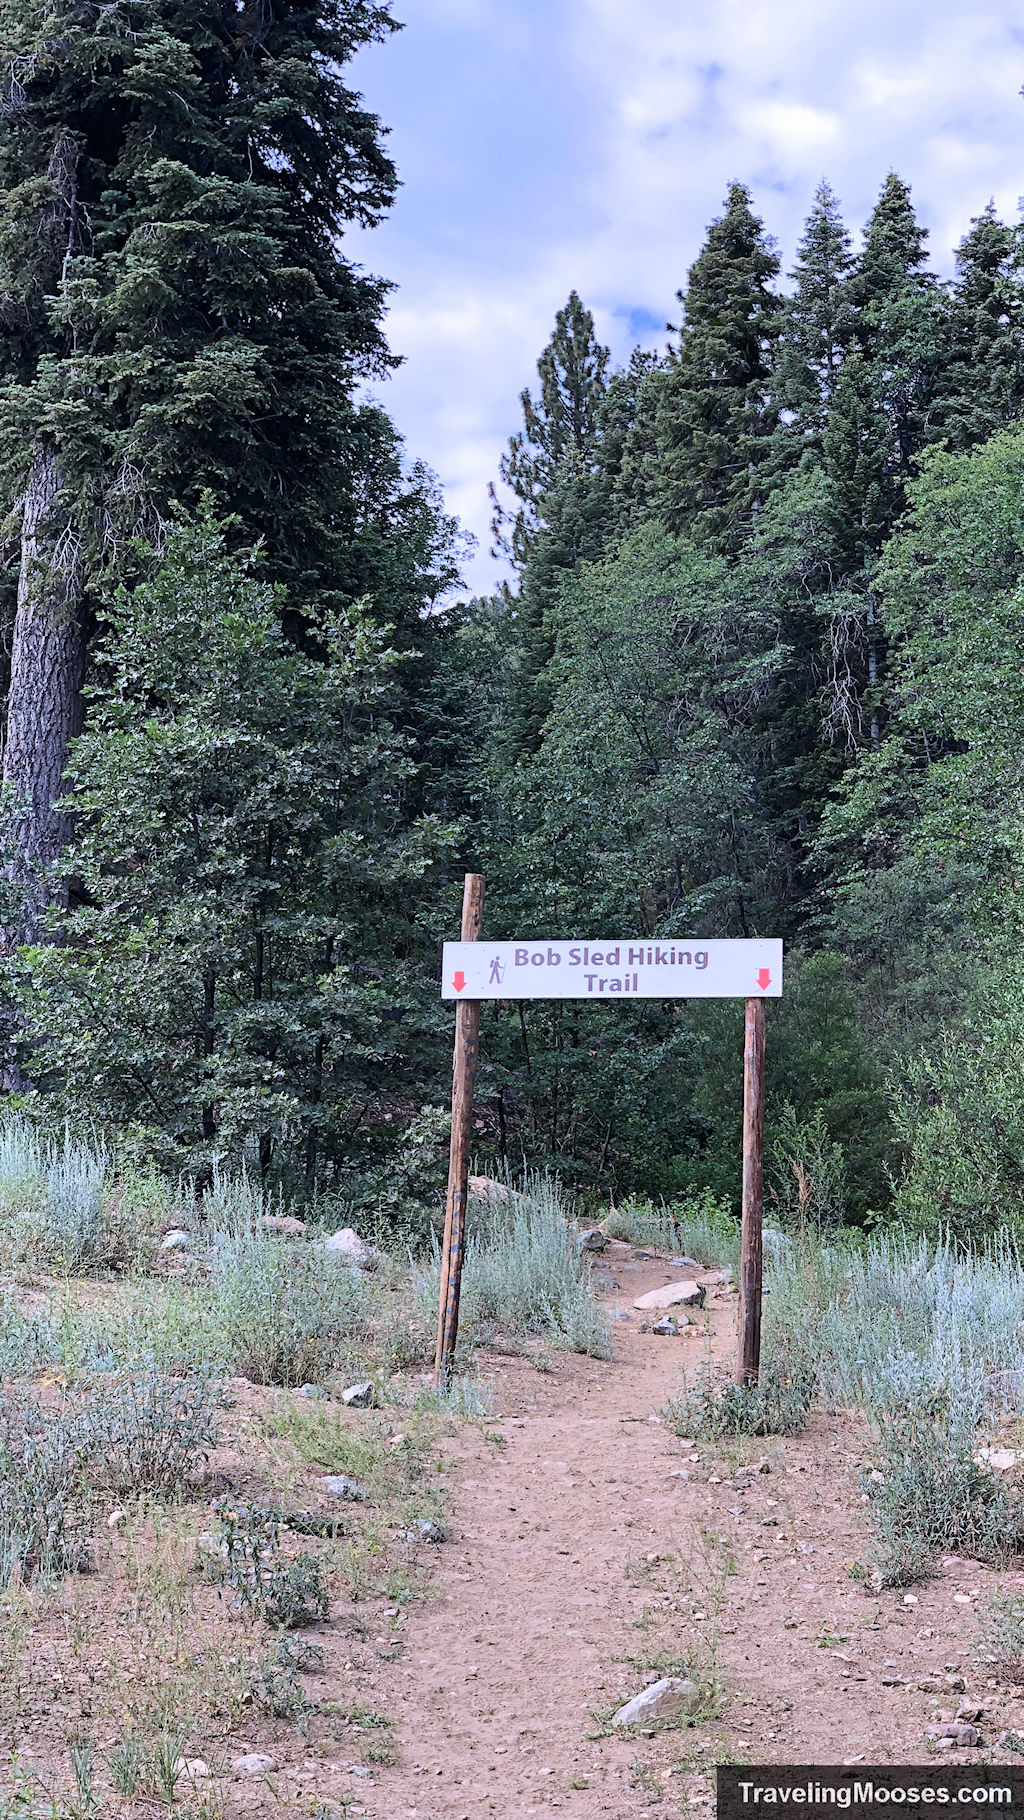 Start of treeline at Bobsled hiking trail